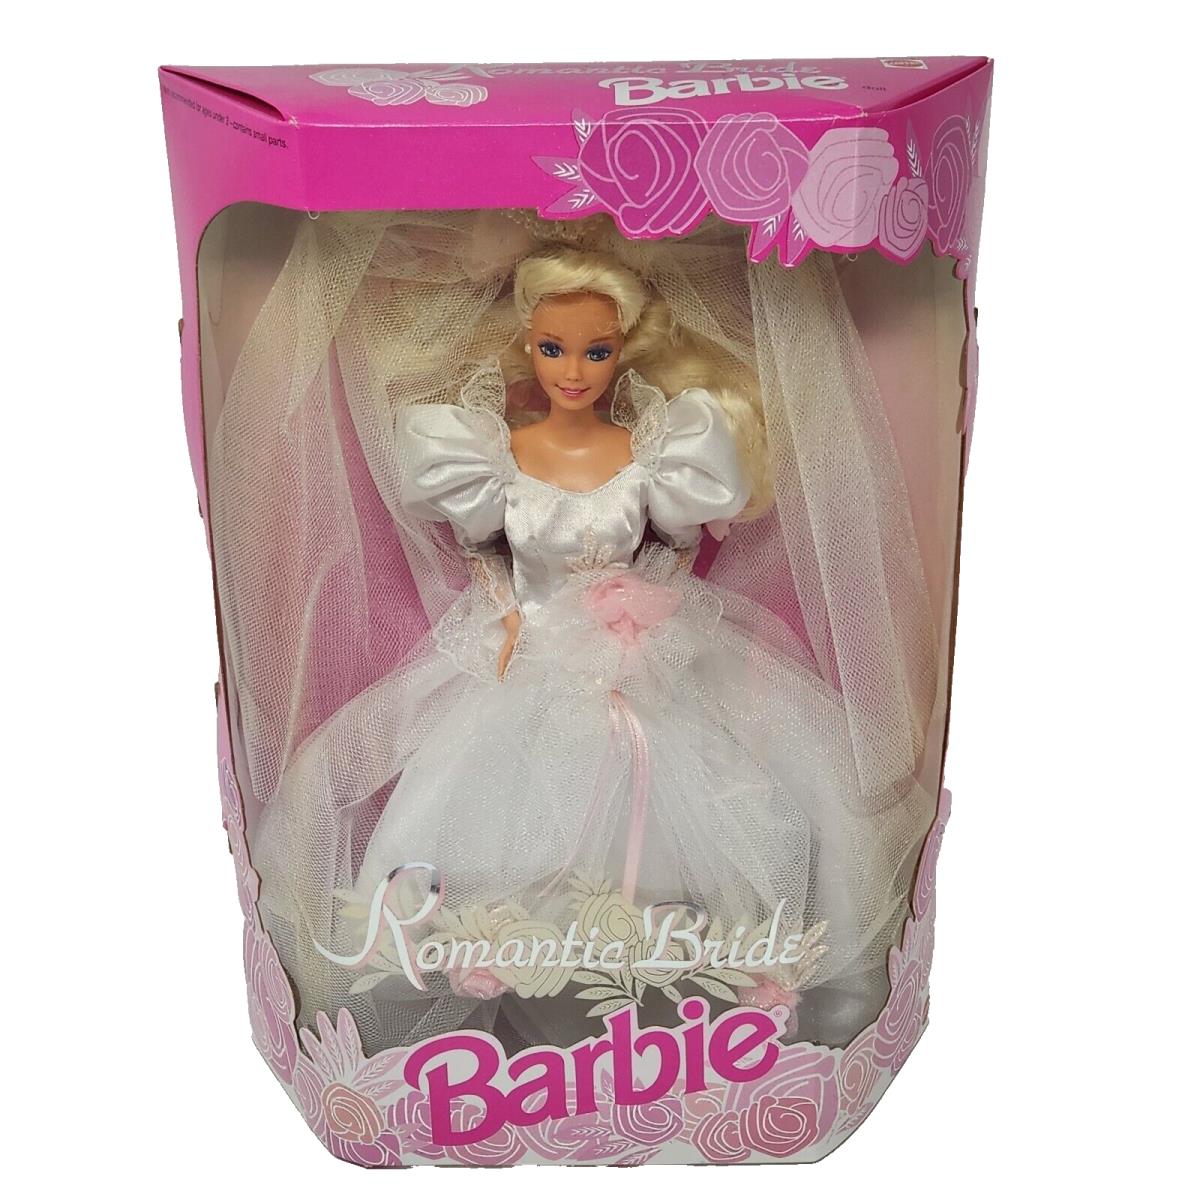 Vintage 1992 Romantic Wedding Bride Barbie Doll Mattel Box 1861